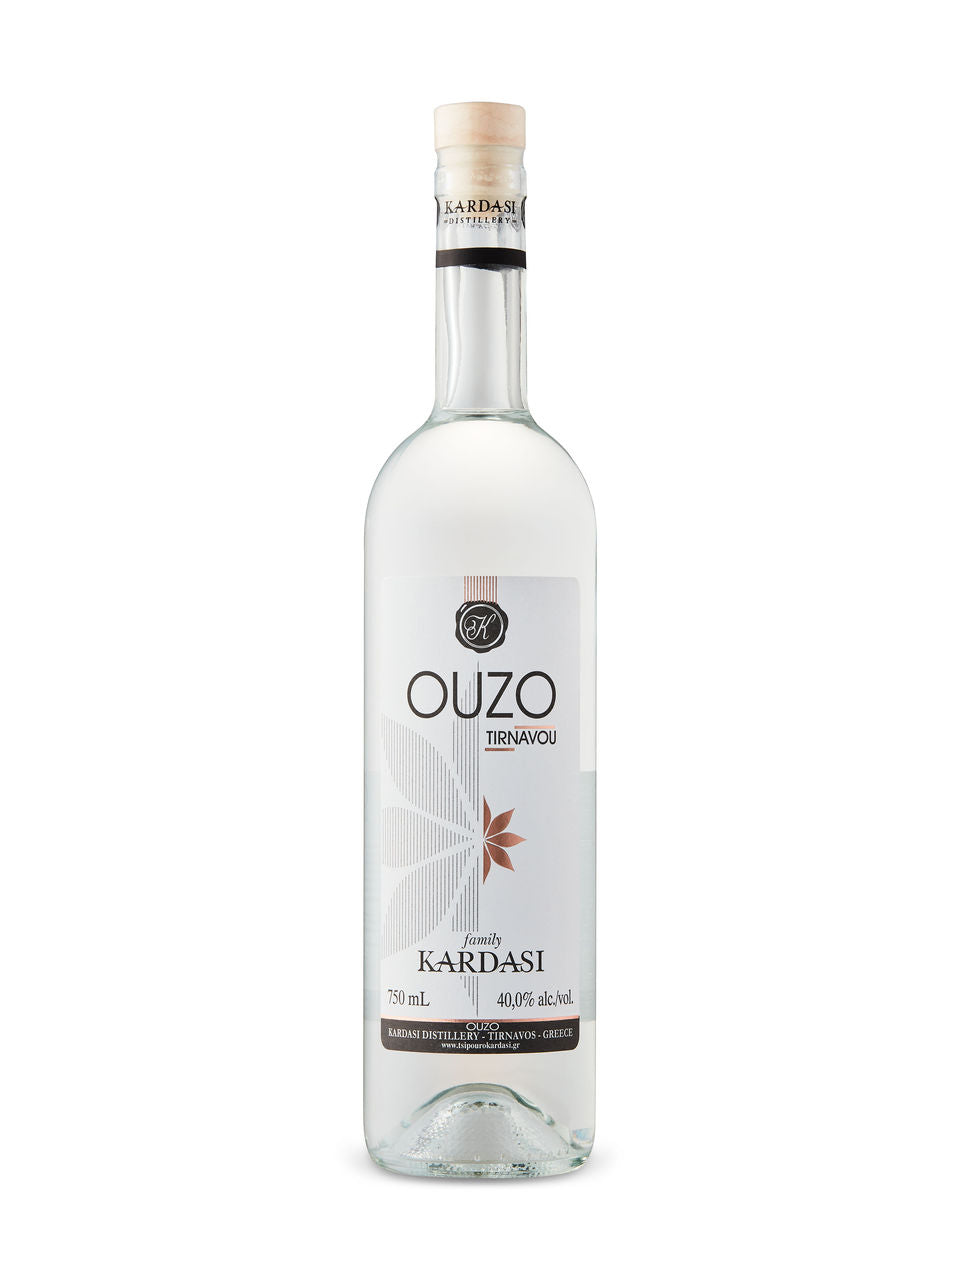 Kardasi Ouzo Tirnavou 750 ml bottle